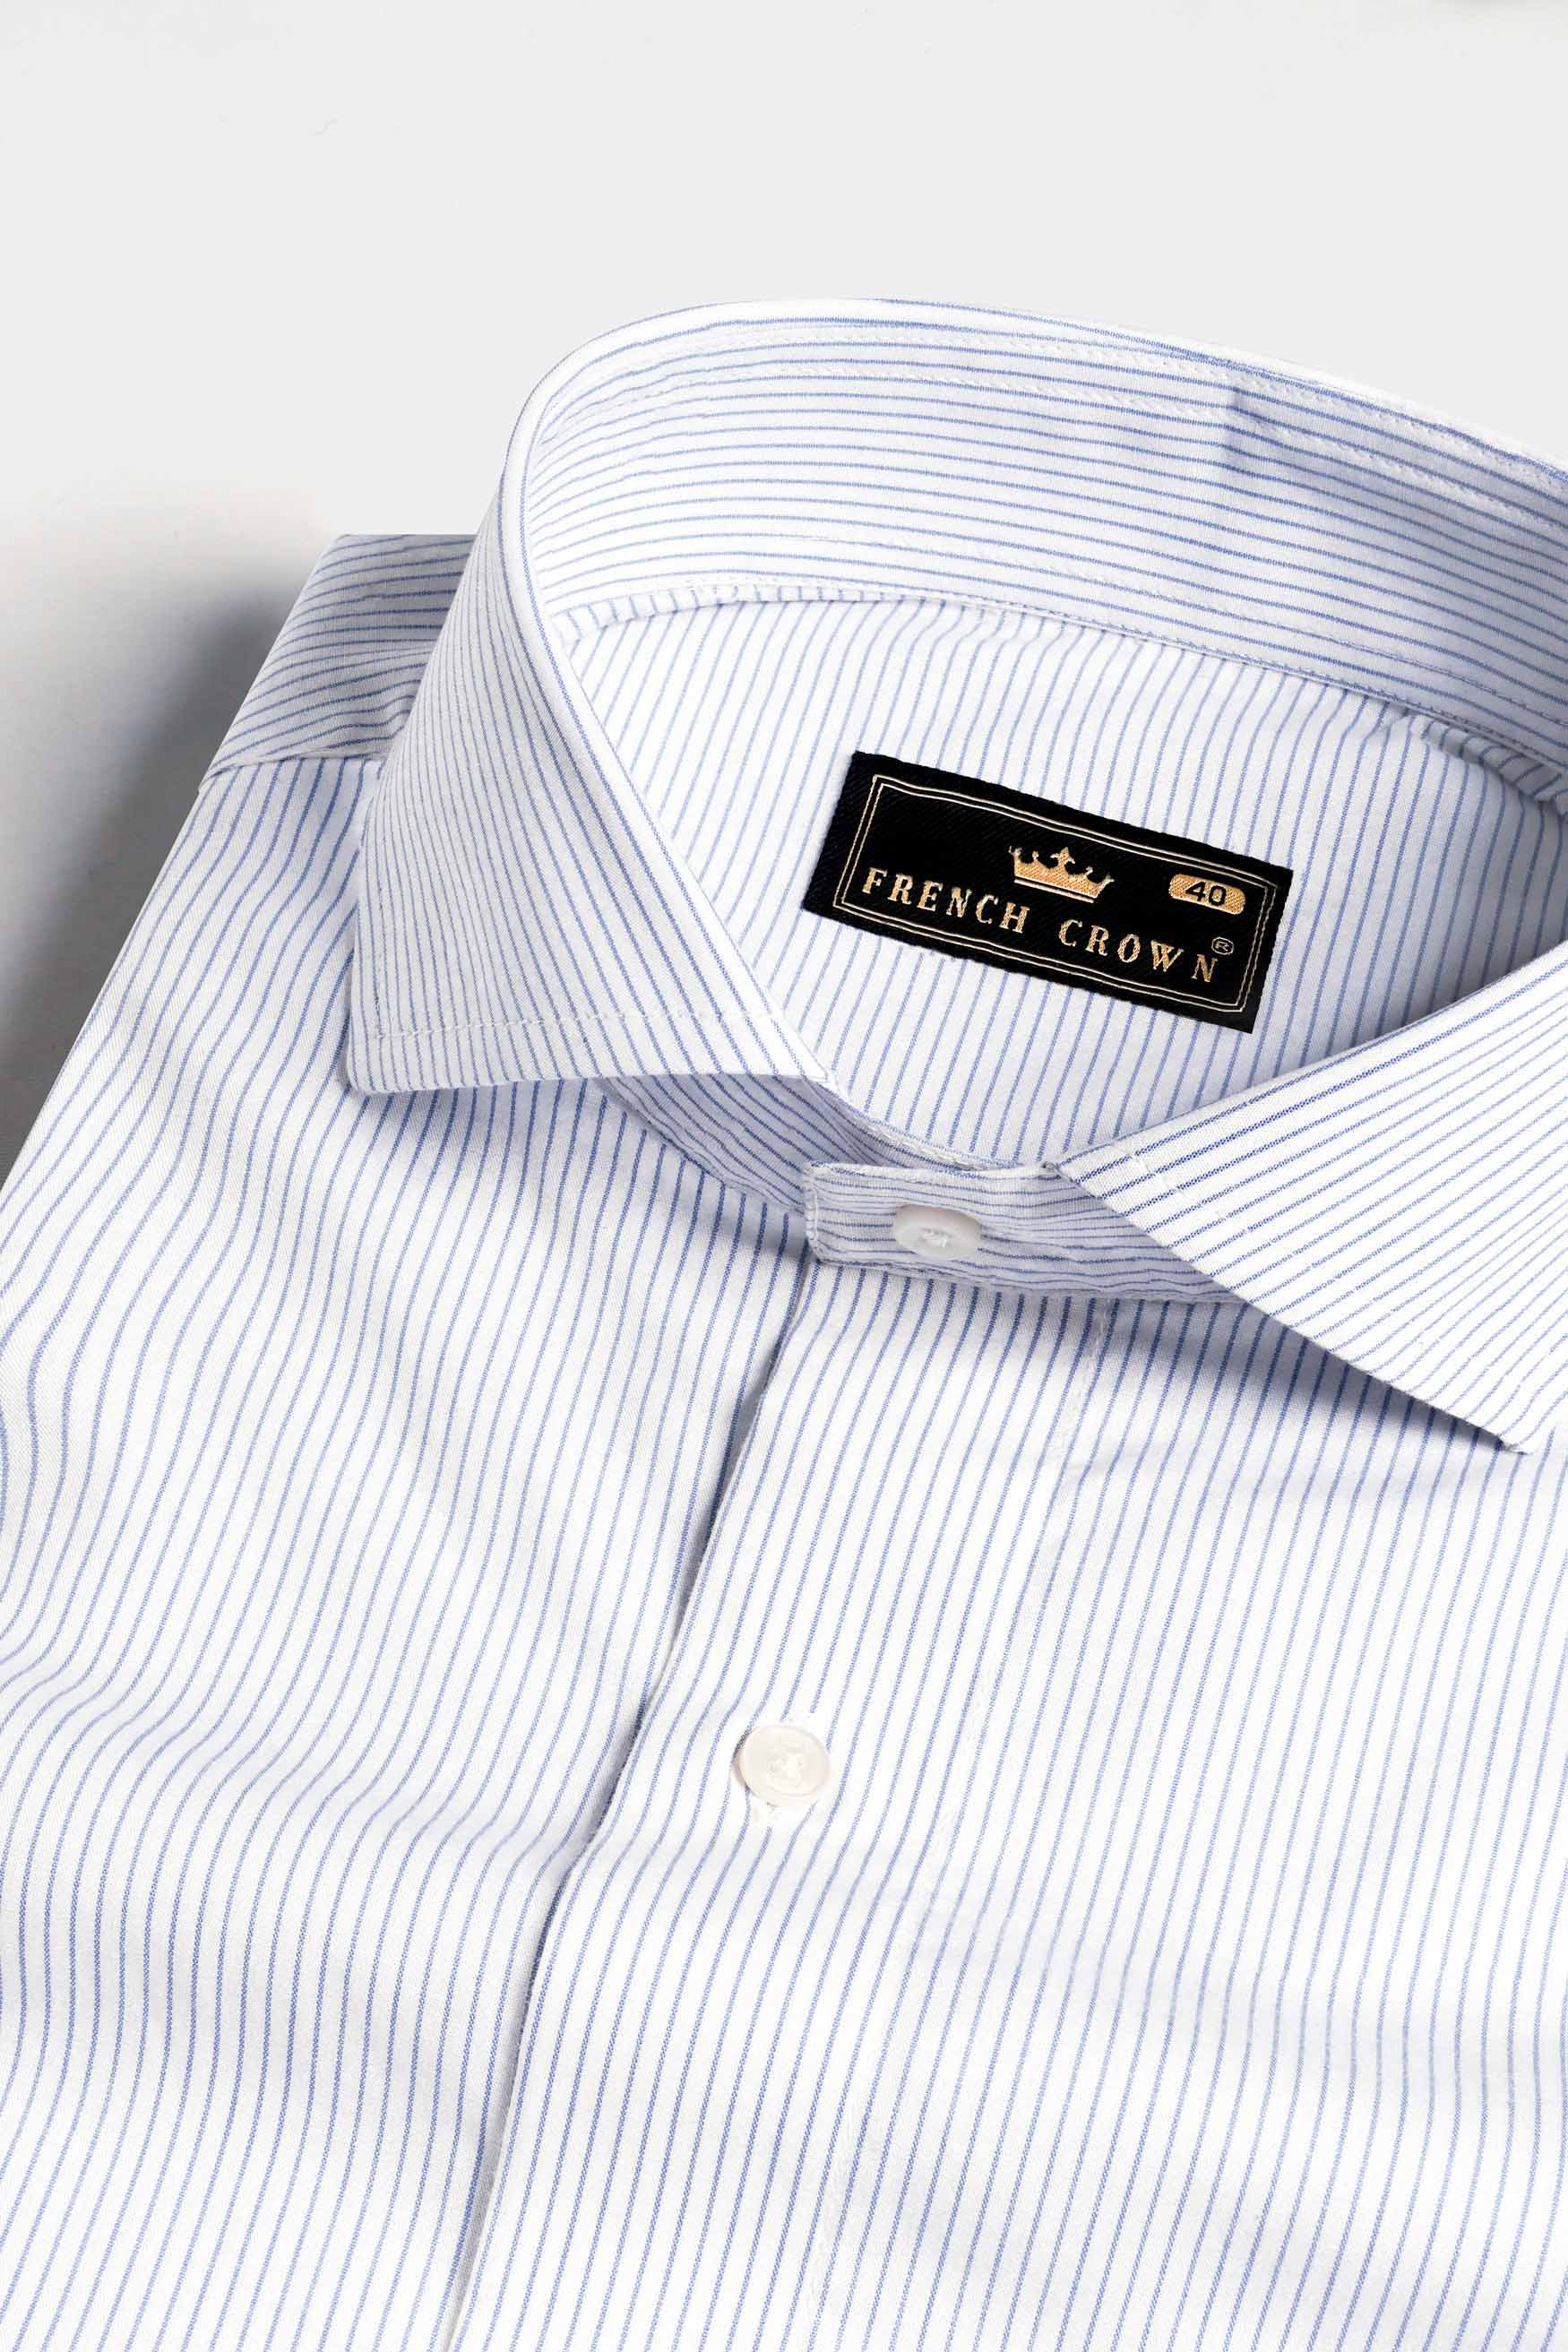 Bright White and Yonder Blue Pin Striped Premium Cotton Shirt